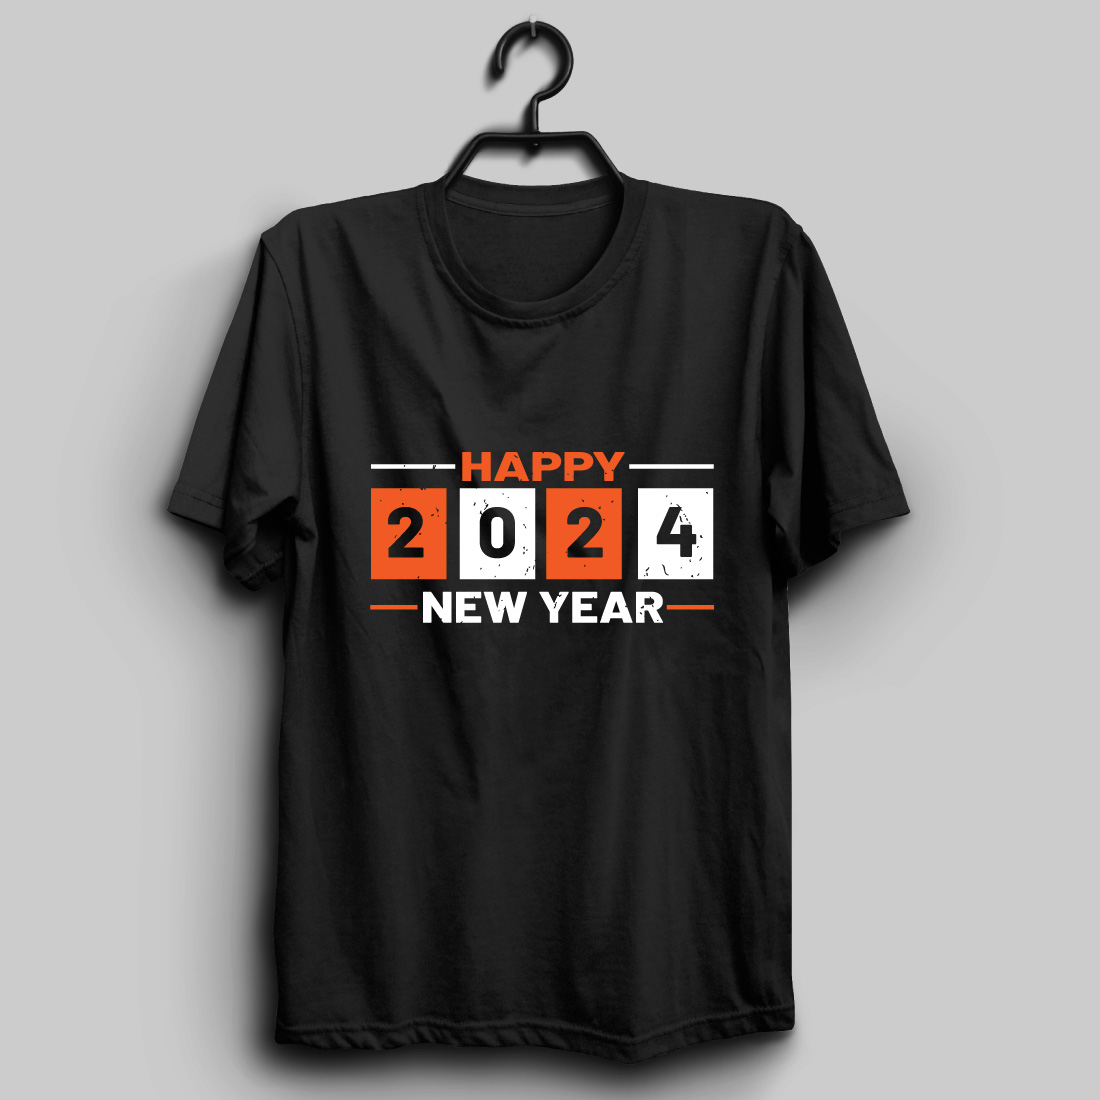 new year shirt design04 347